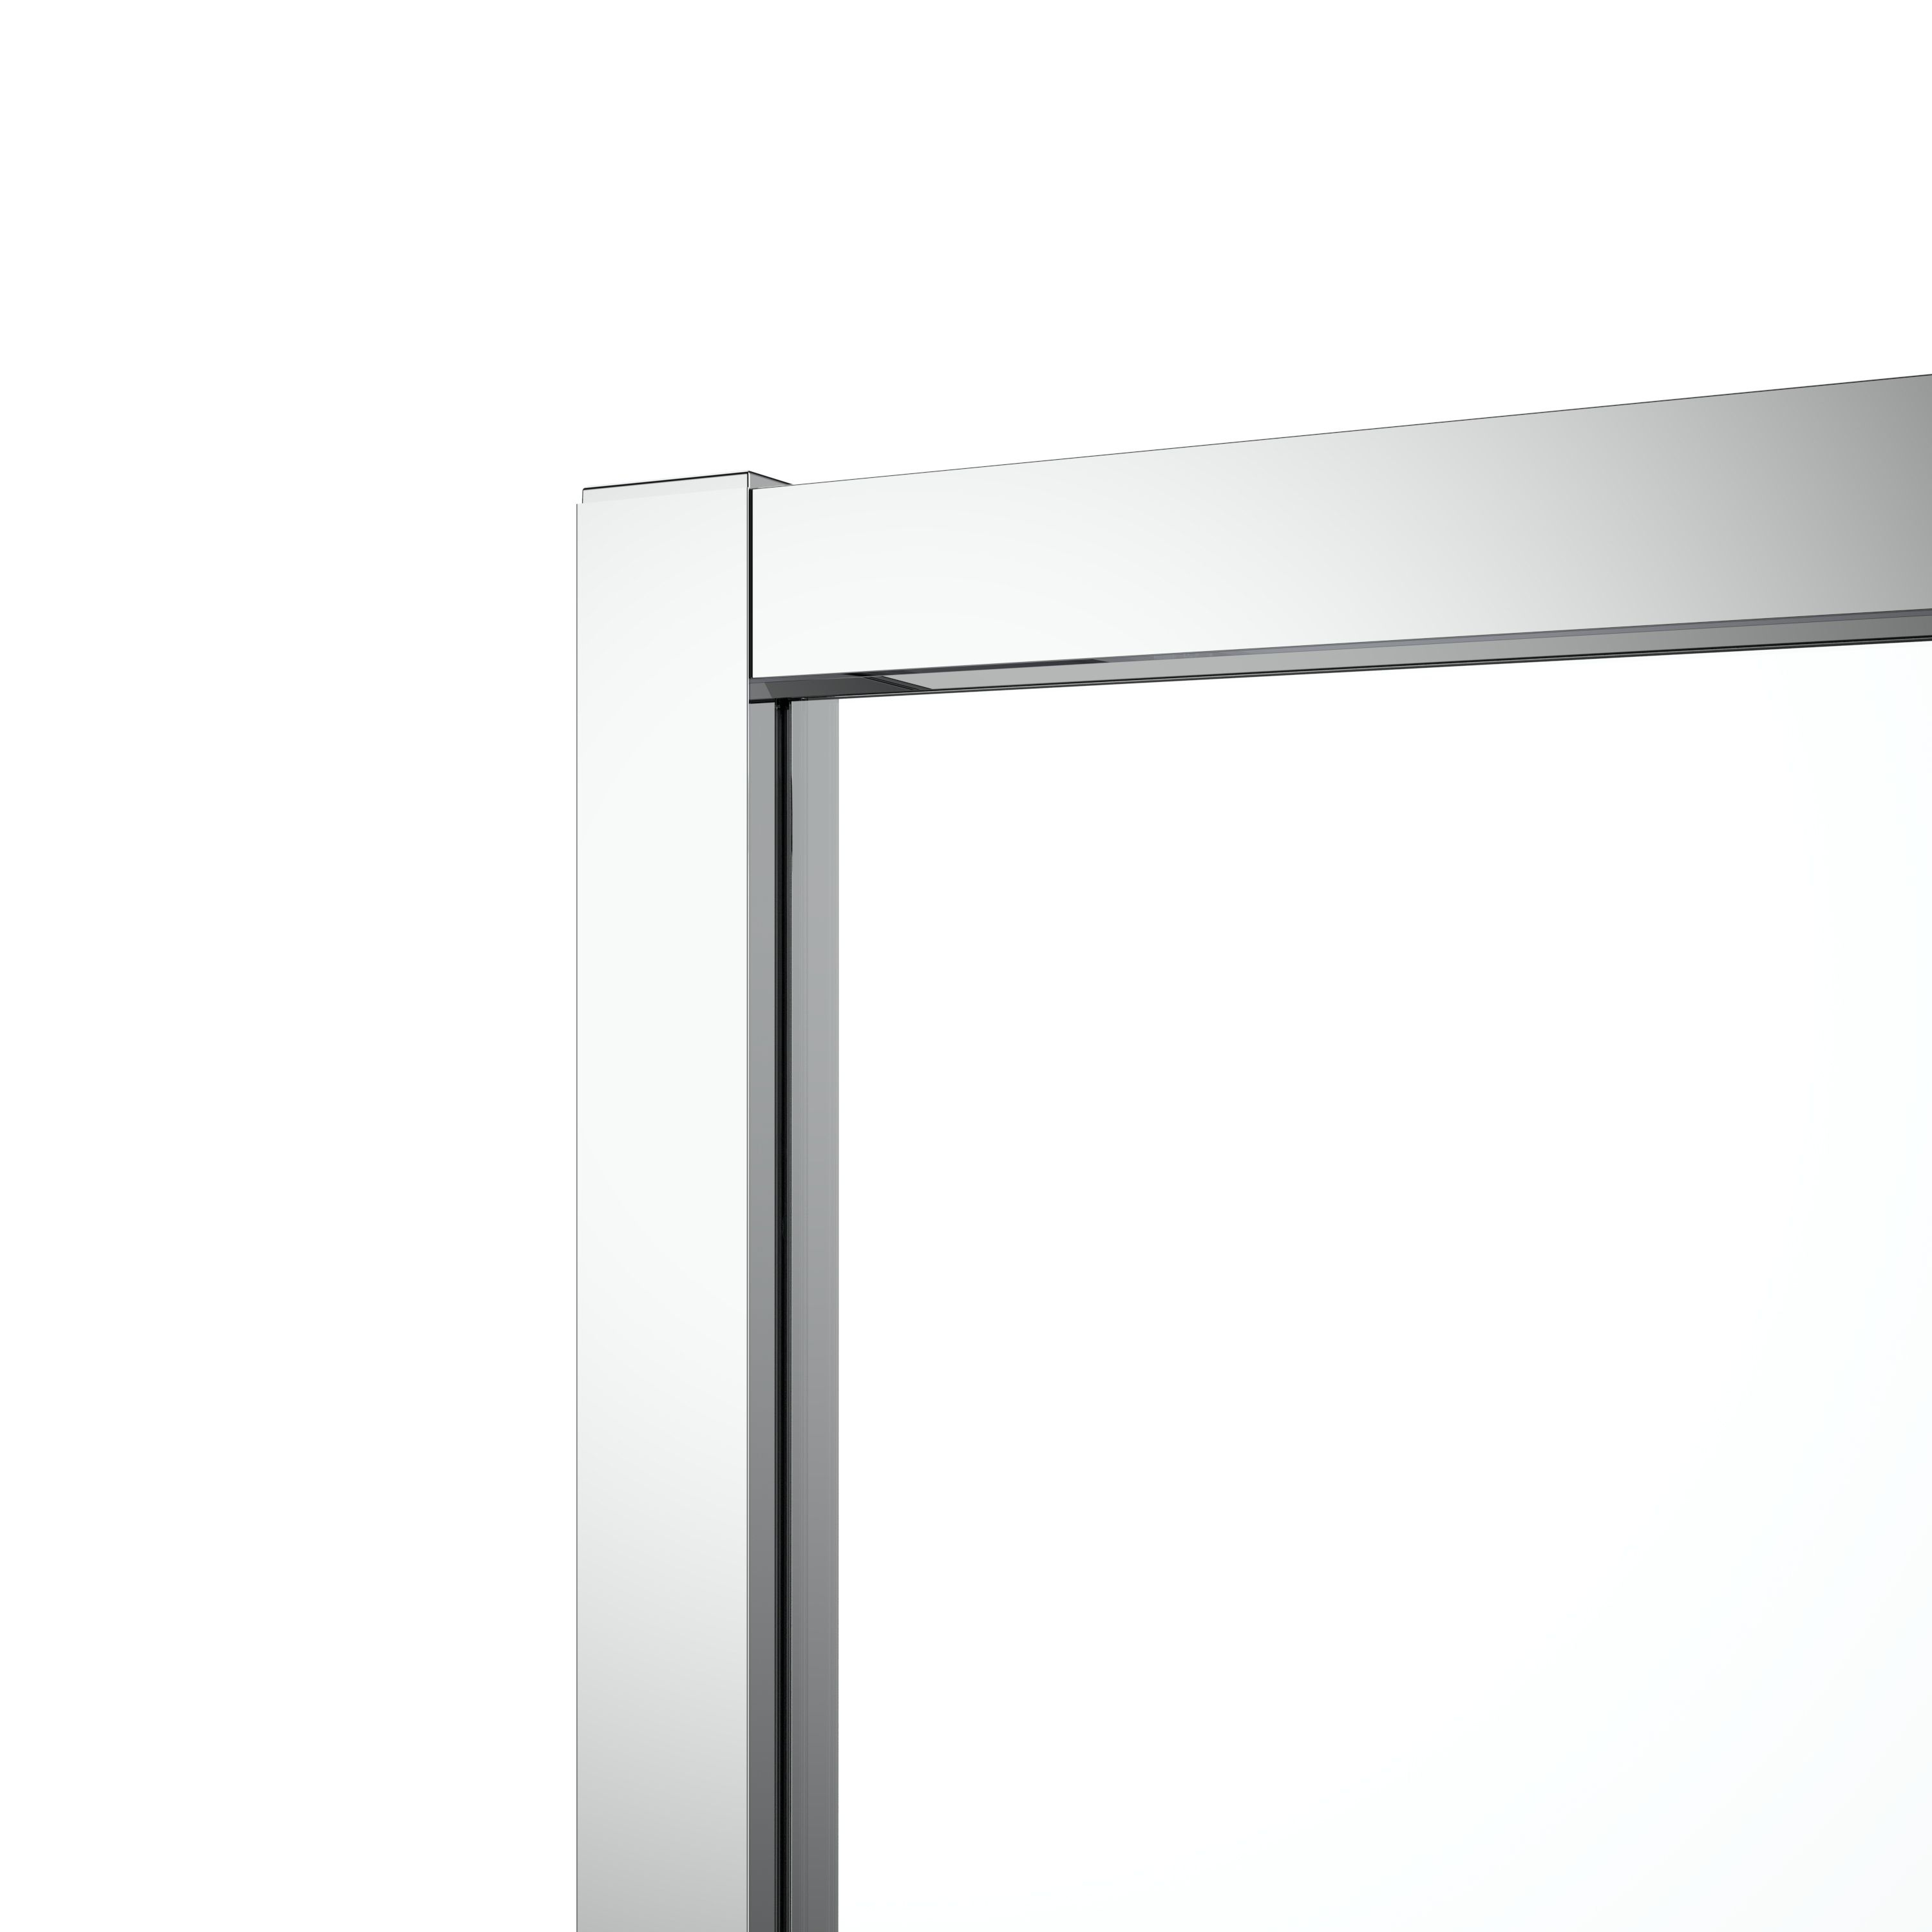 GoodHome Ledava Semi-mirrored Chrome effect Square Shower enclosure - Corner entry double sliding door (W)90cm (D)90cm